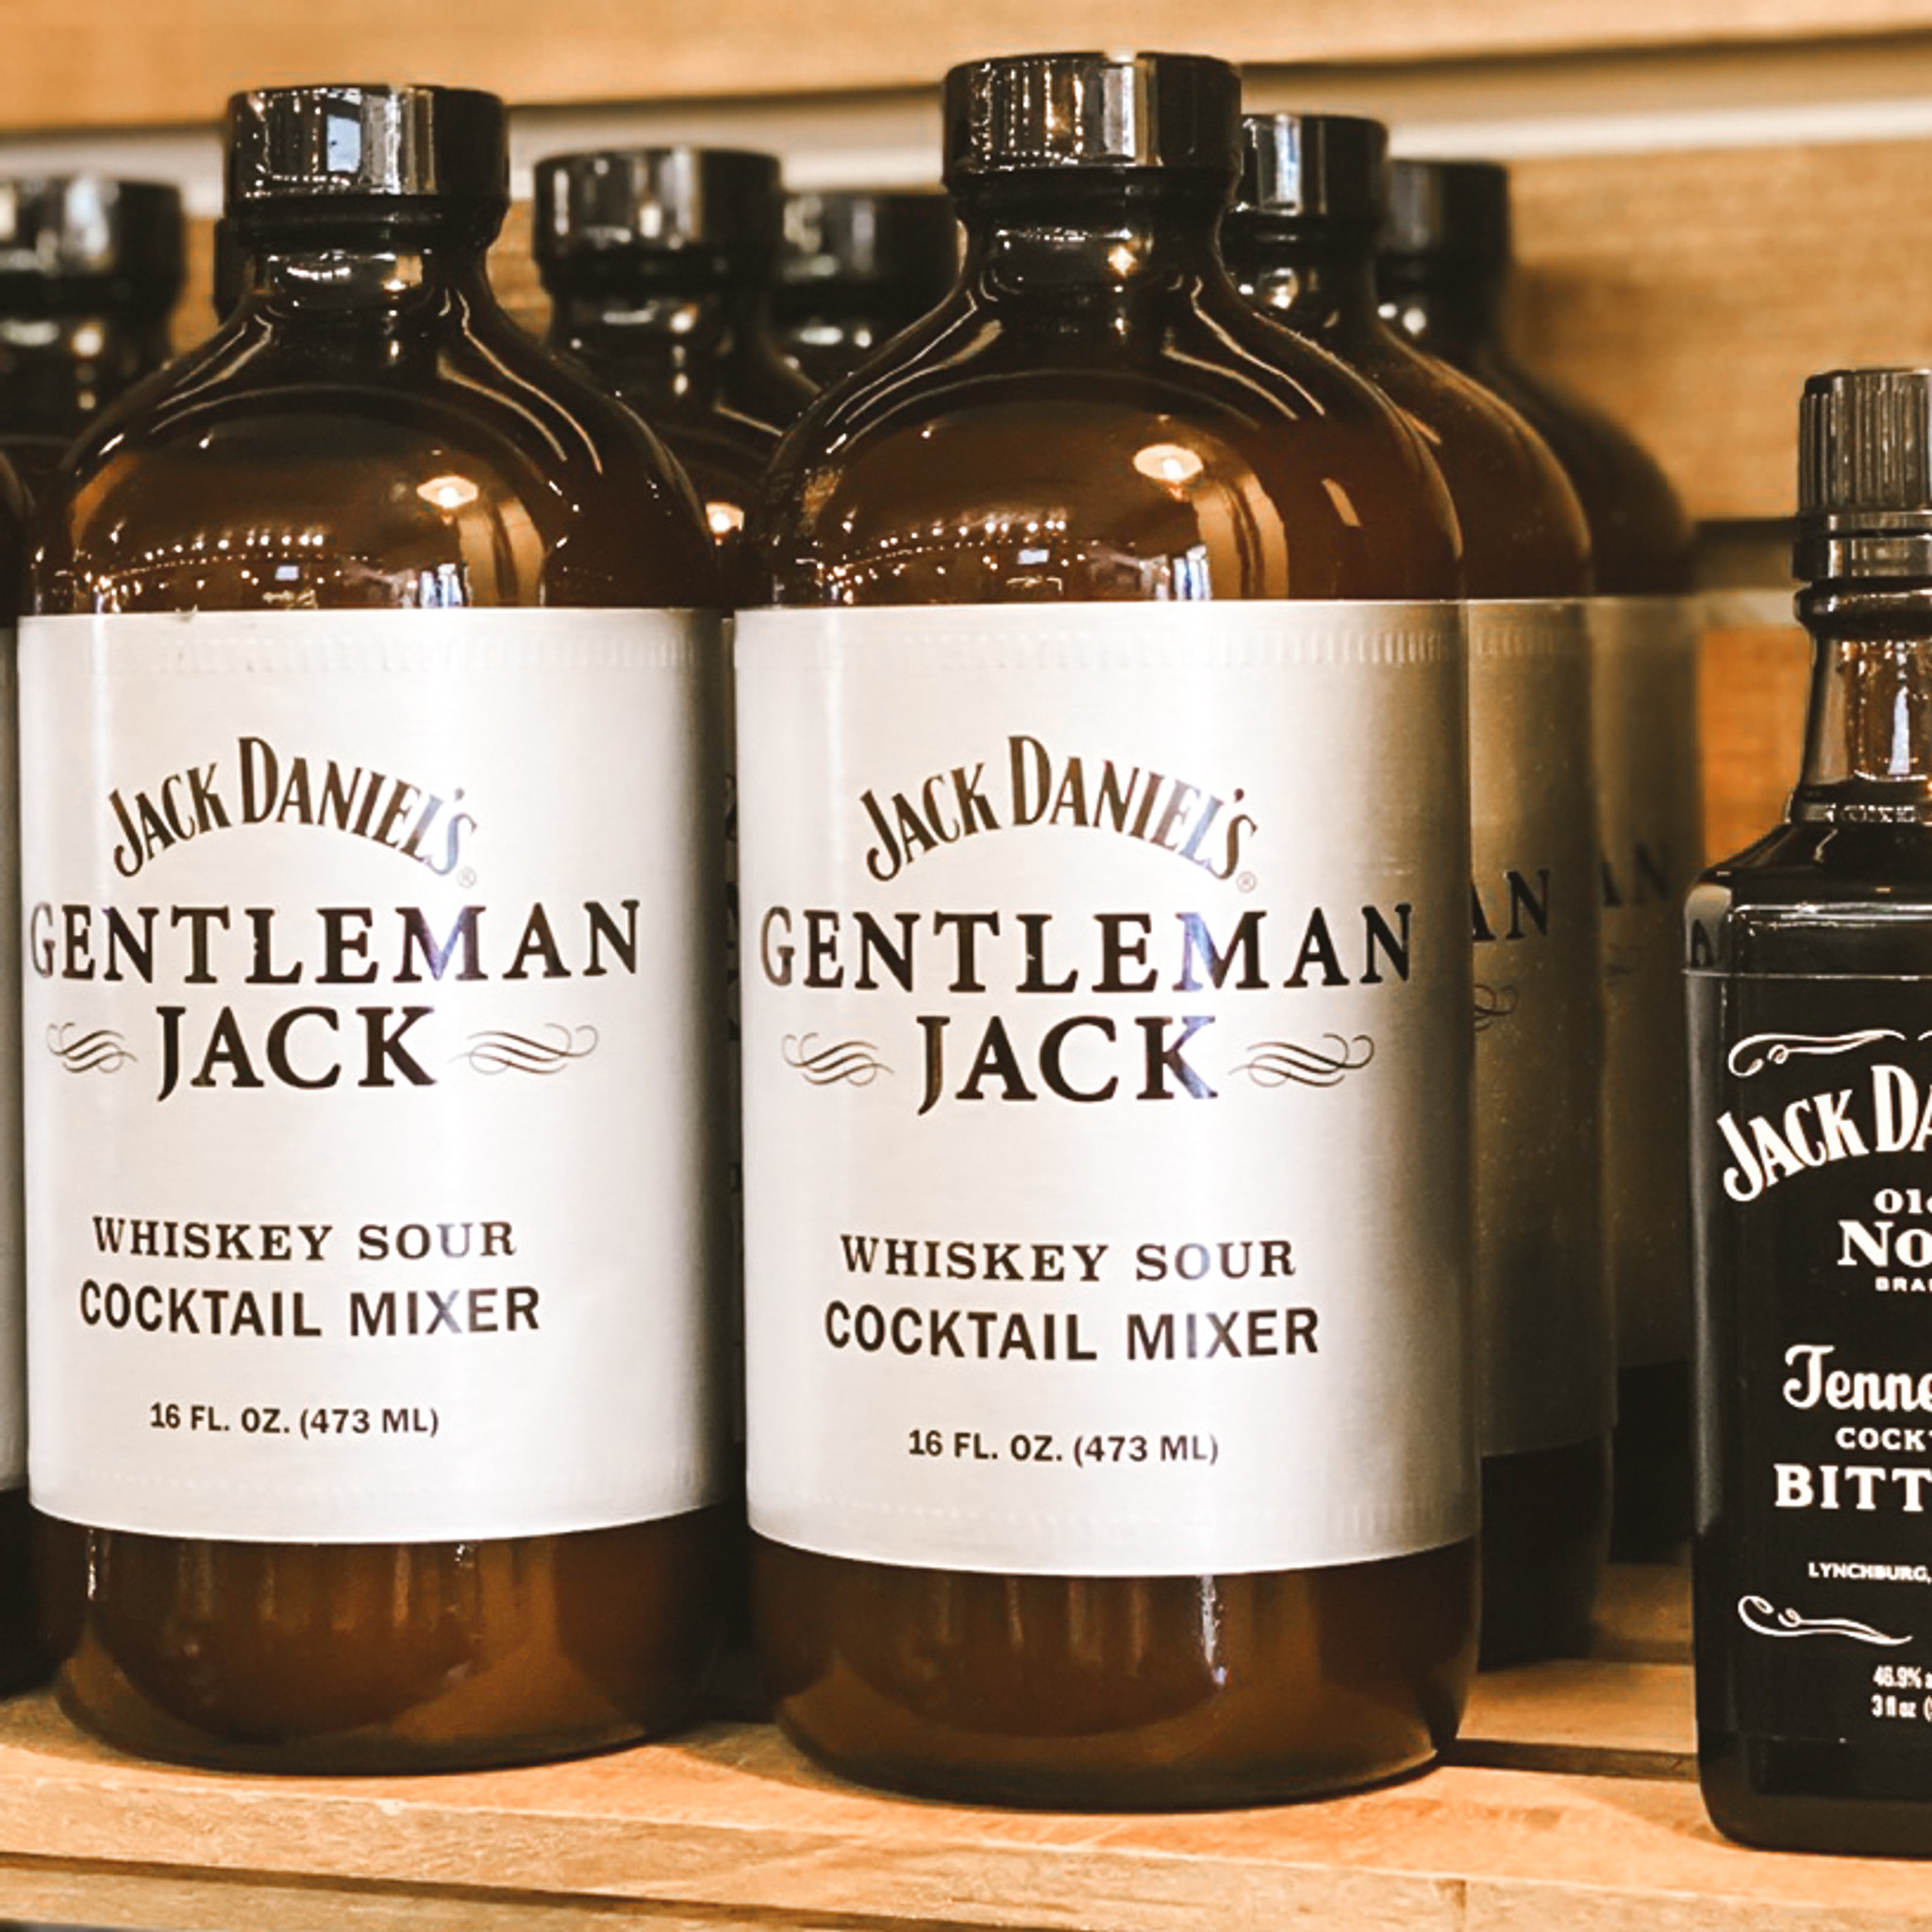 Jack Daniel's Gentleman Jack Whiskey Sour Cocktail Mixer